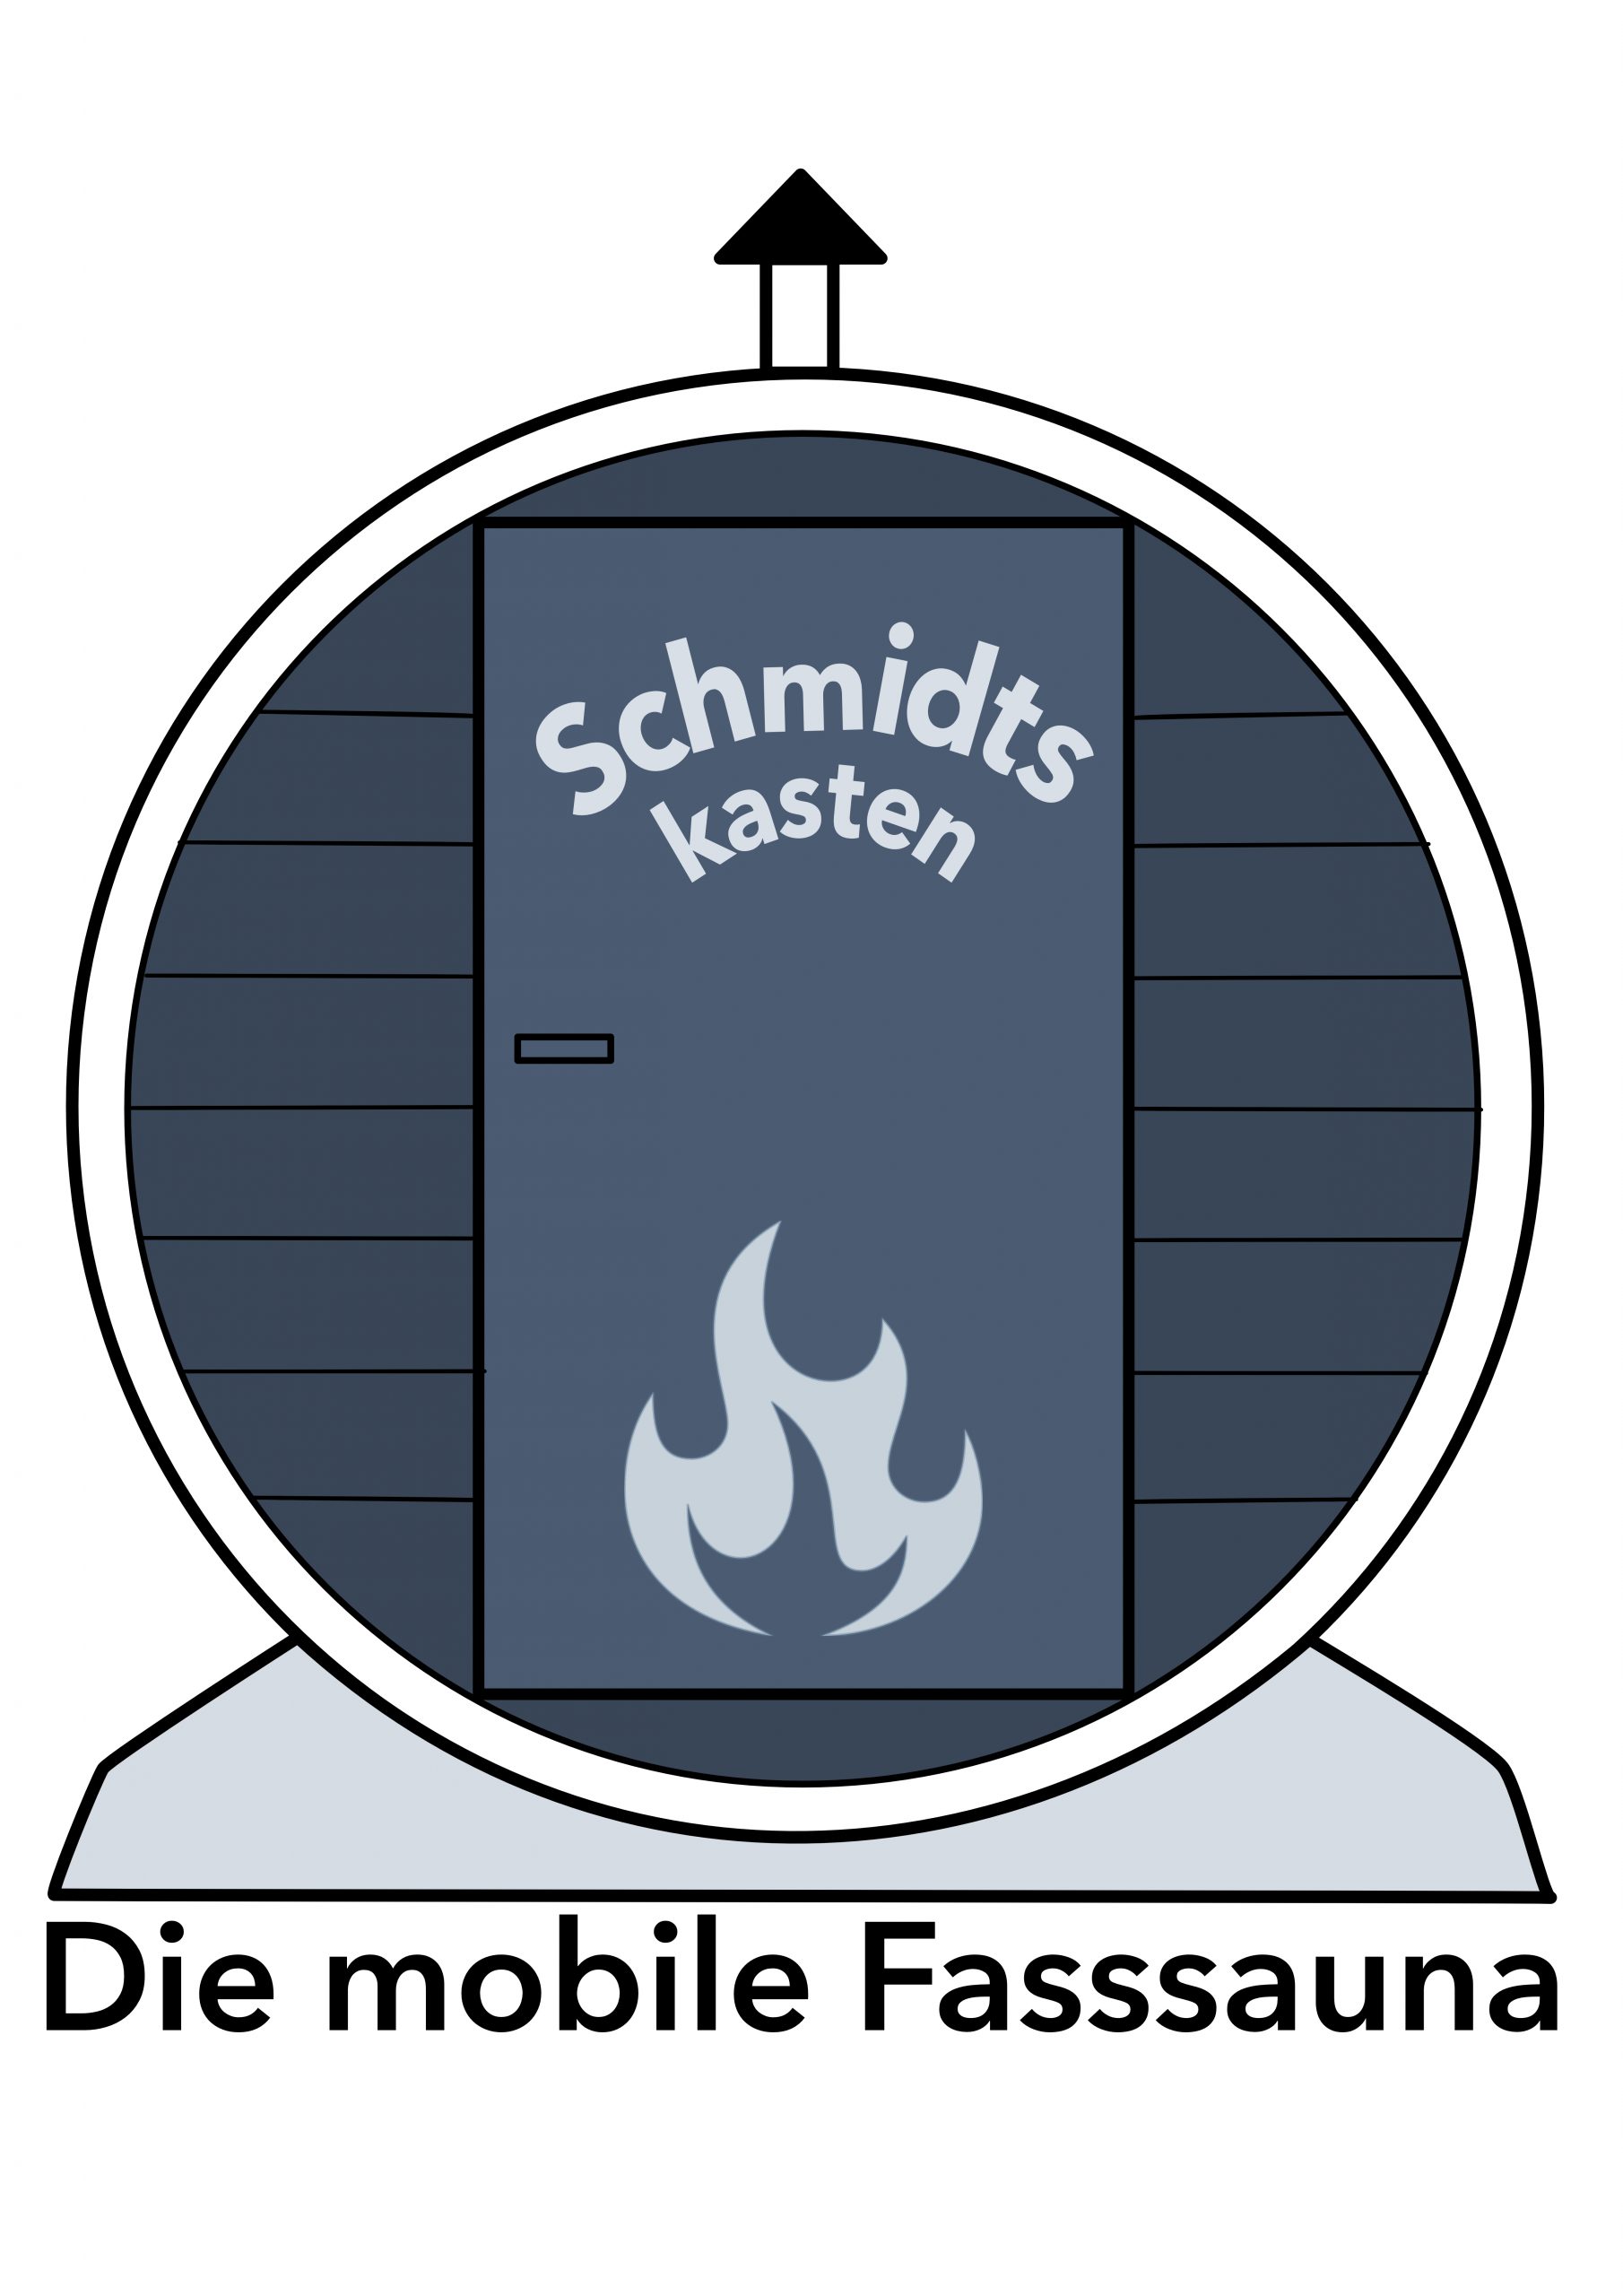 Schmidtskasten